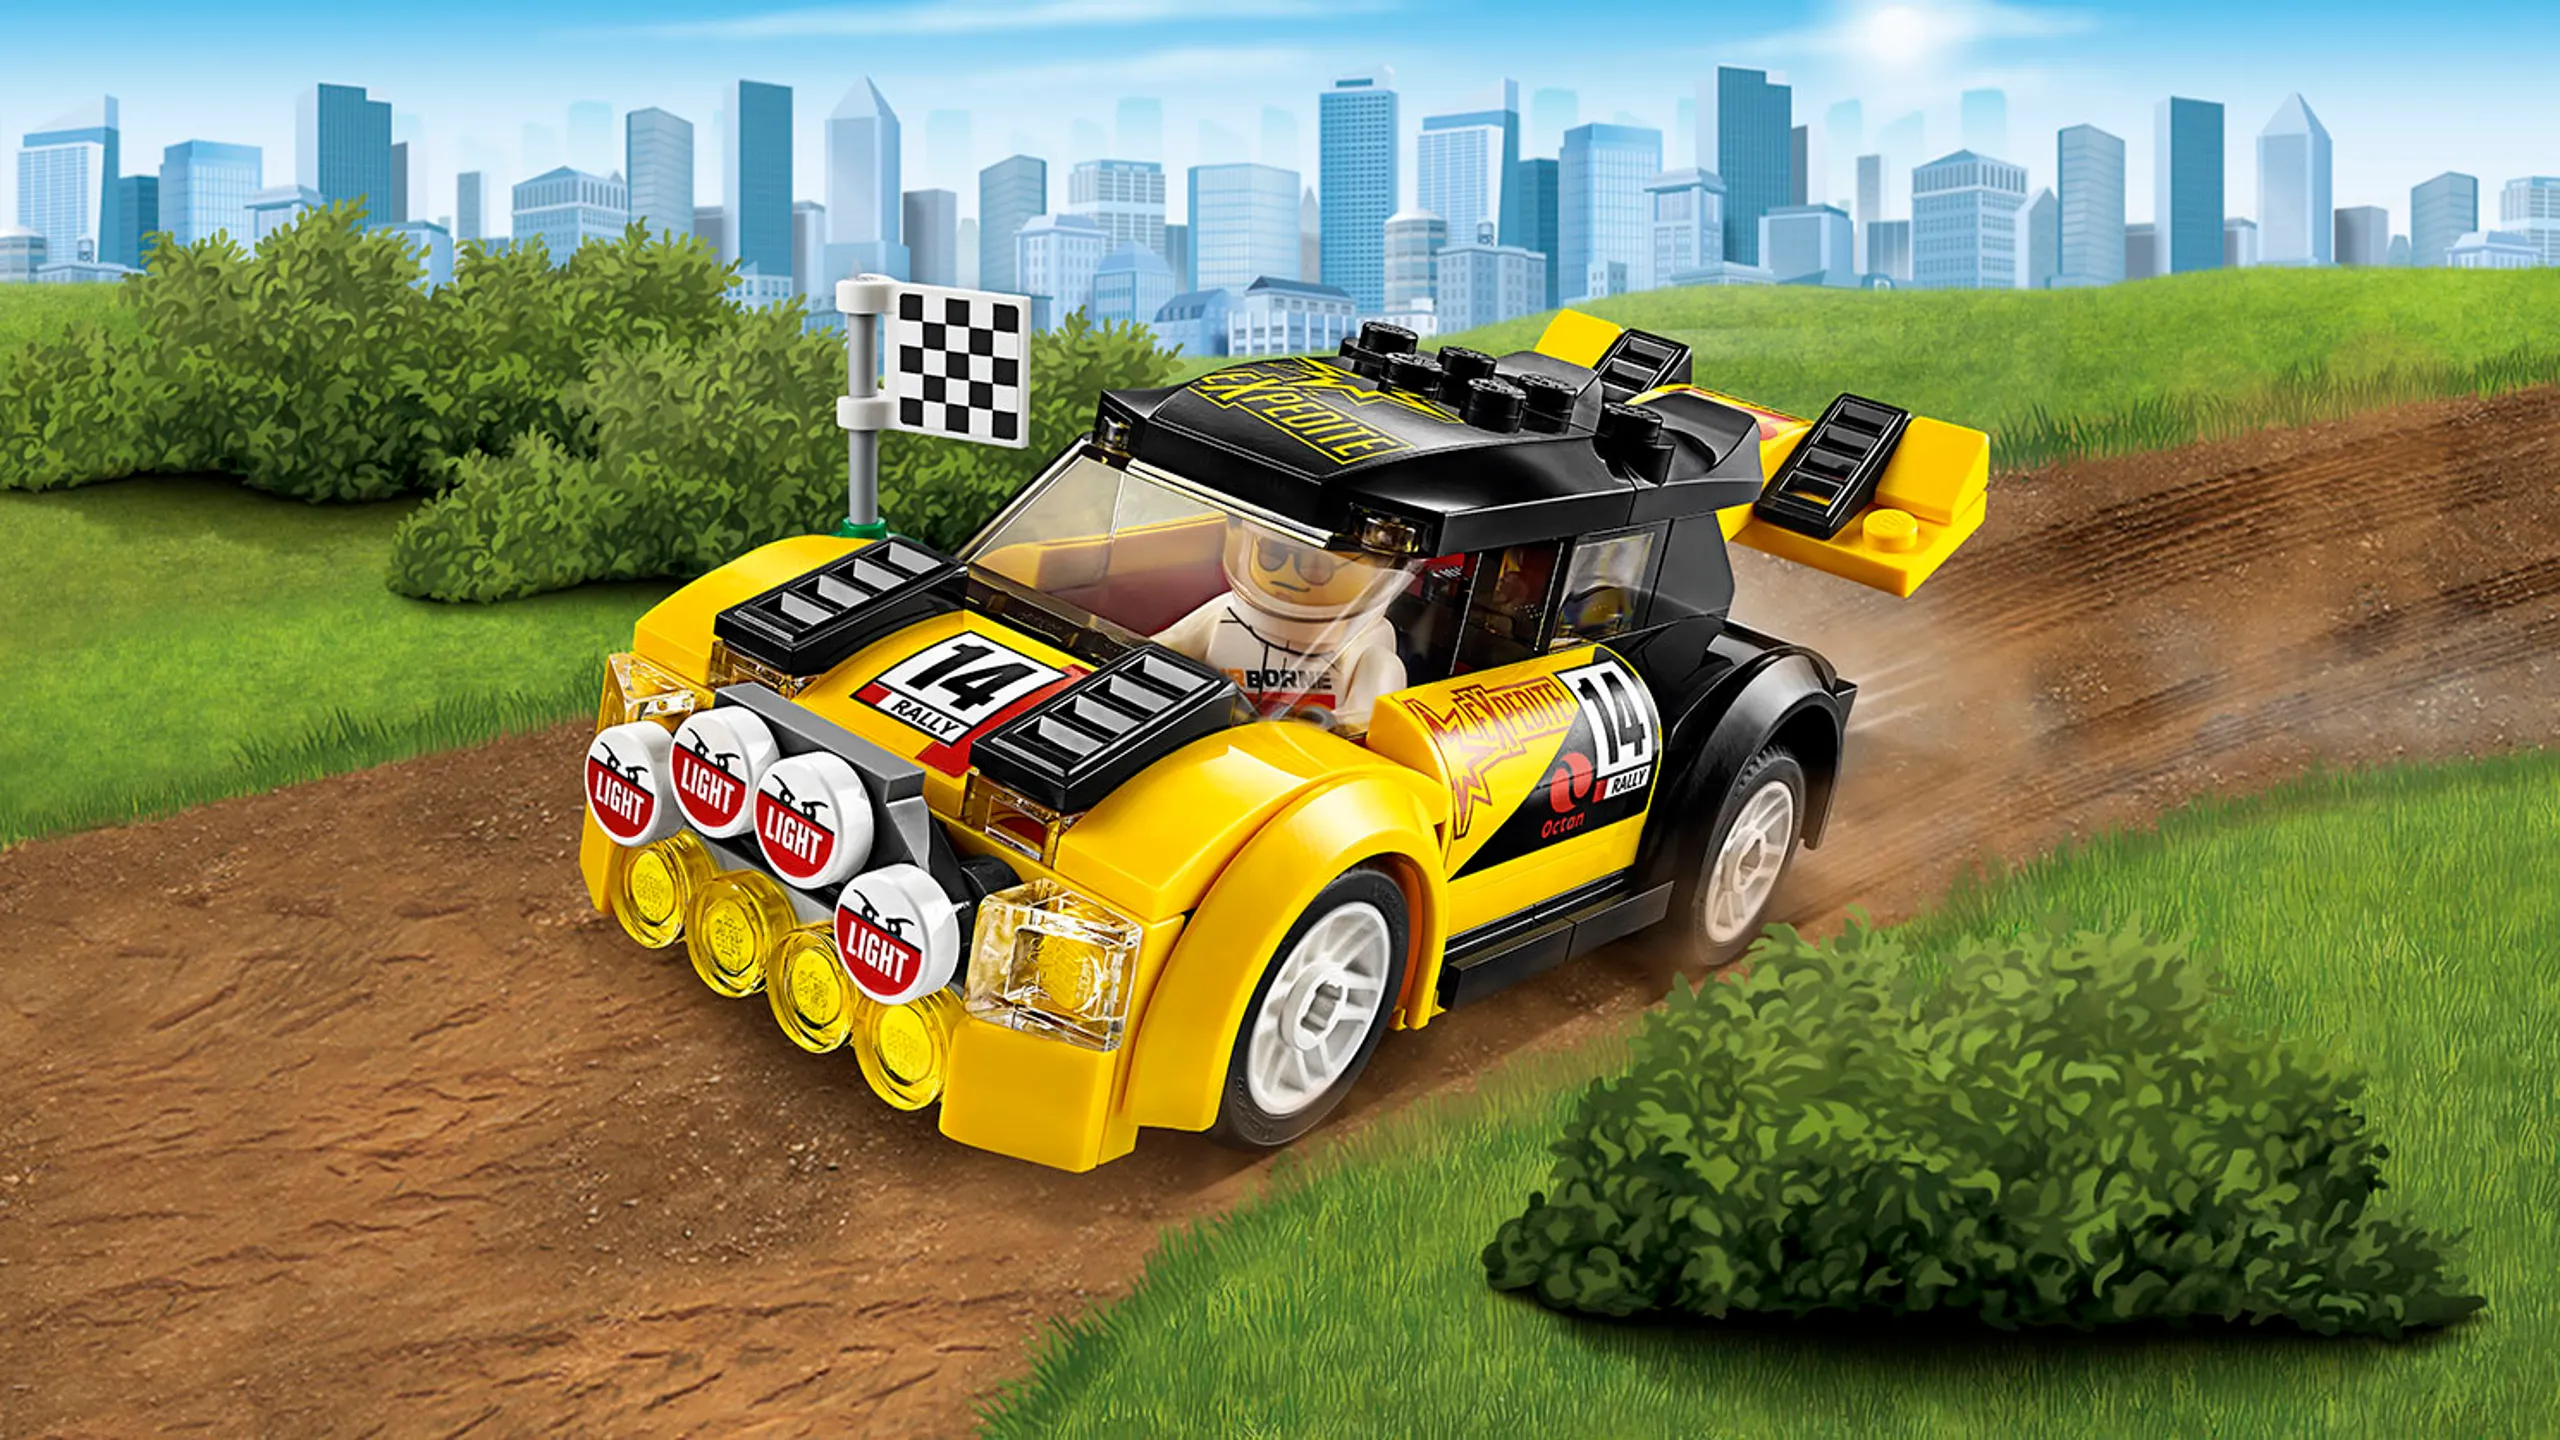 LEGO City Great Vehicles – Rally Car 60113